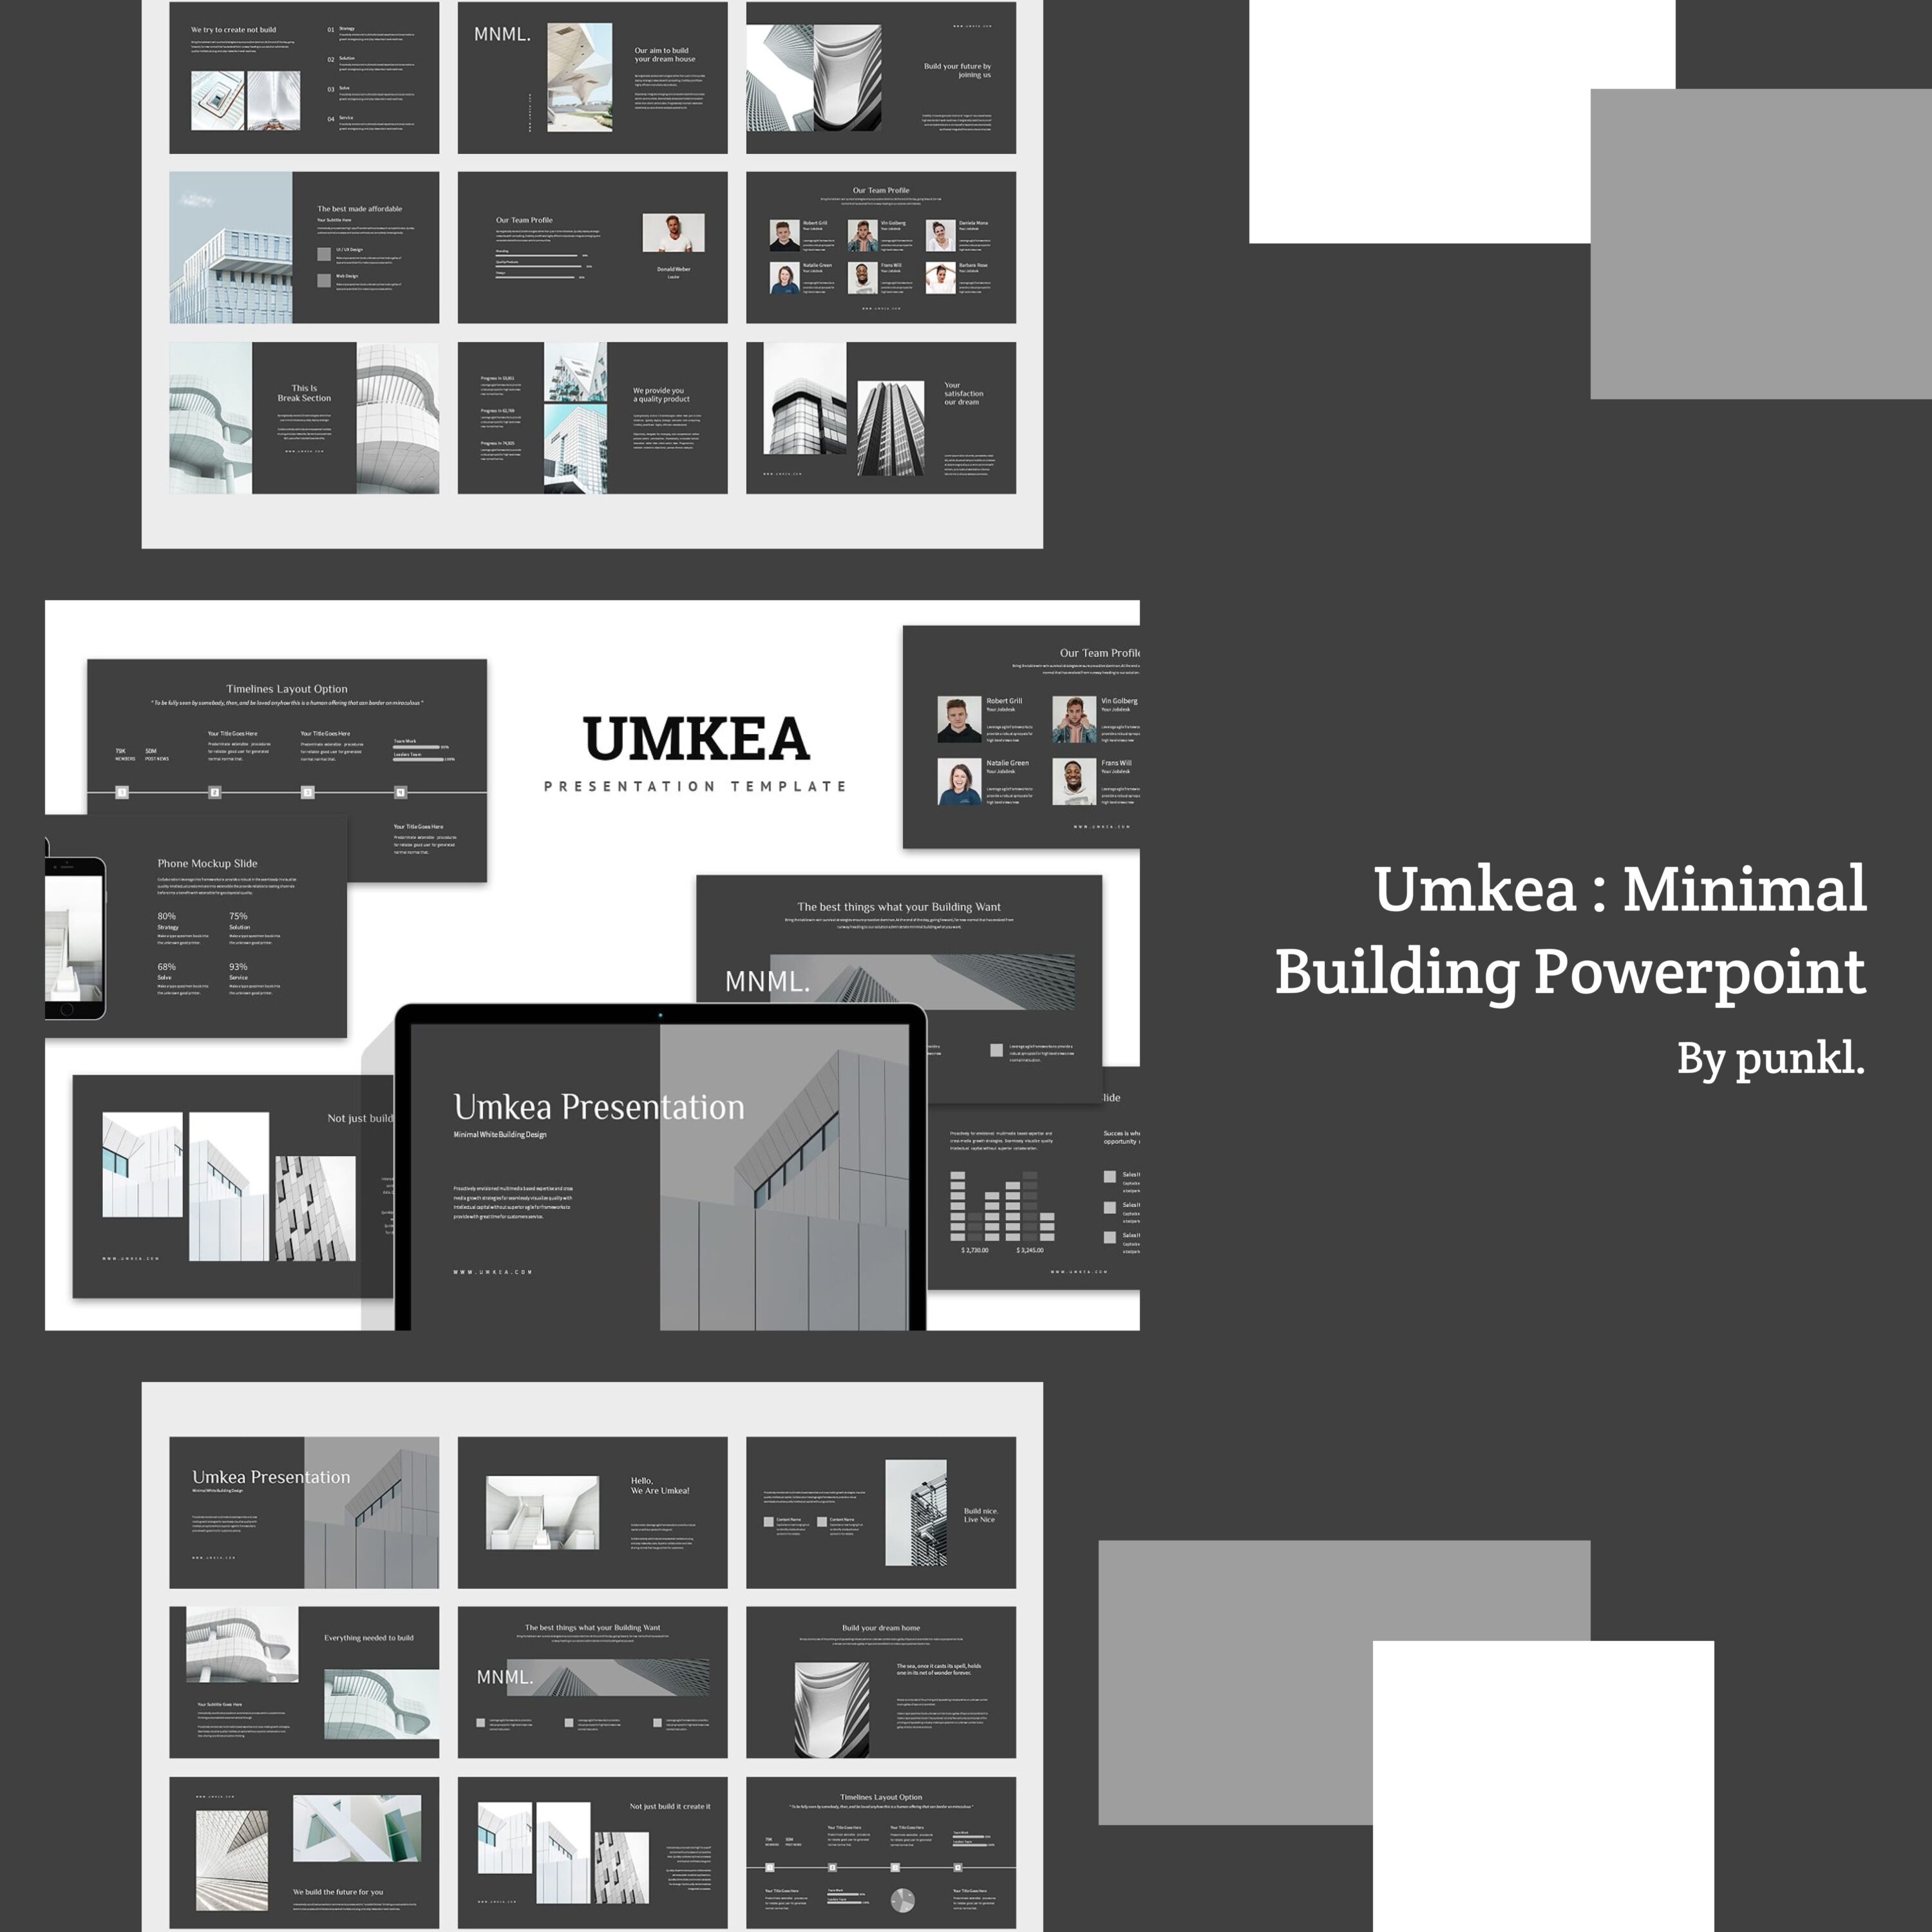 Umkea : Minimal Building Powerpoint cover.